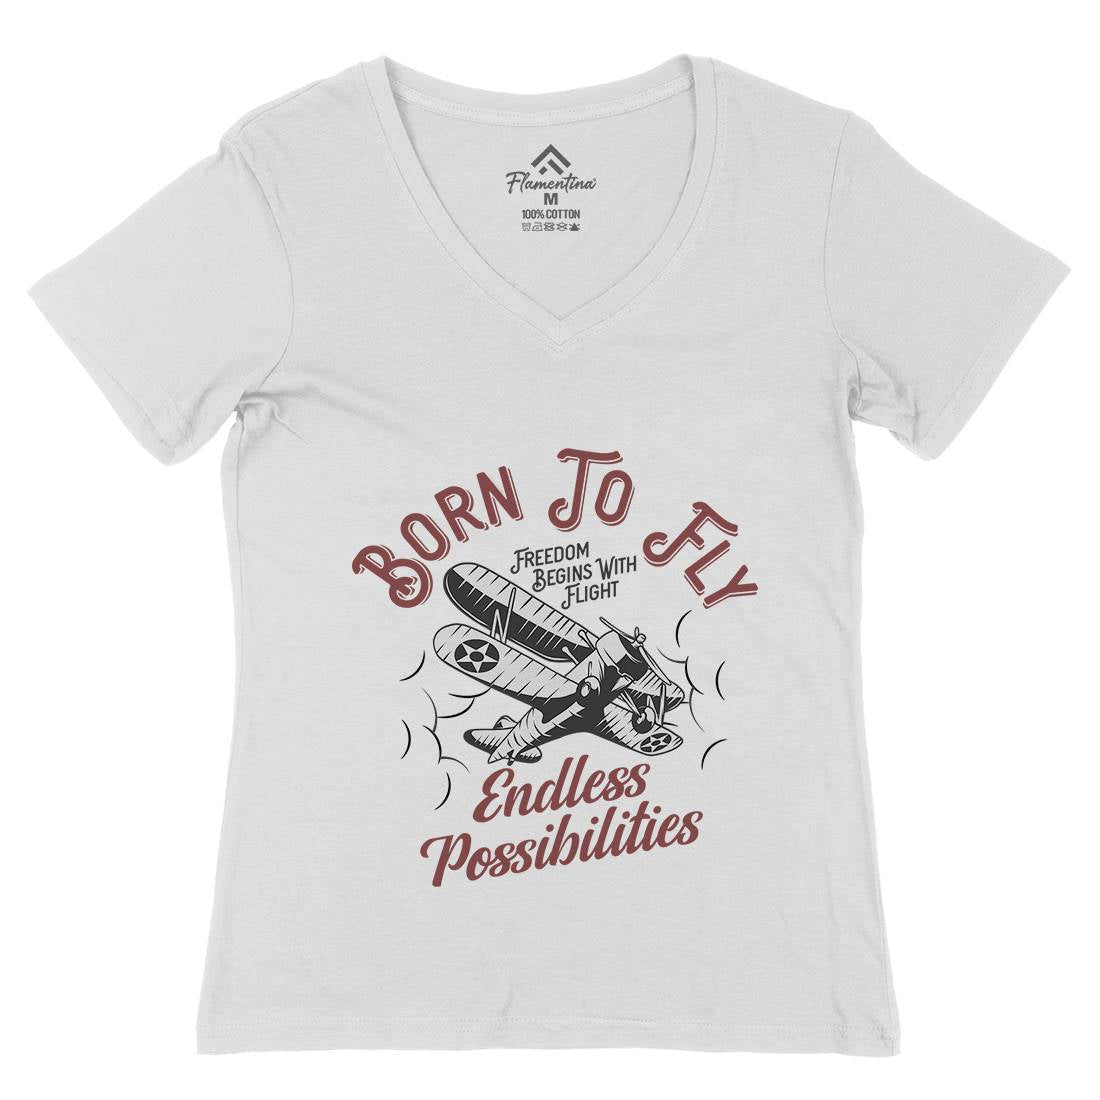 Born To Fly Womens Organic V-Neck T-Shirt Vehicles D913